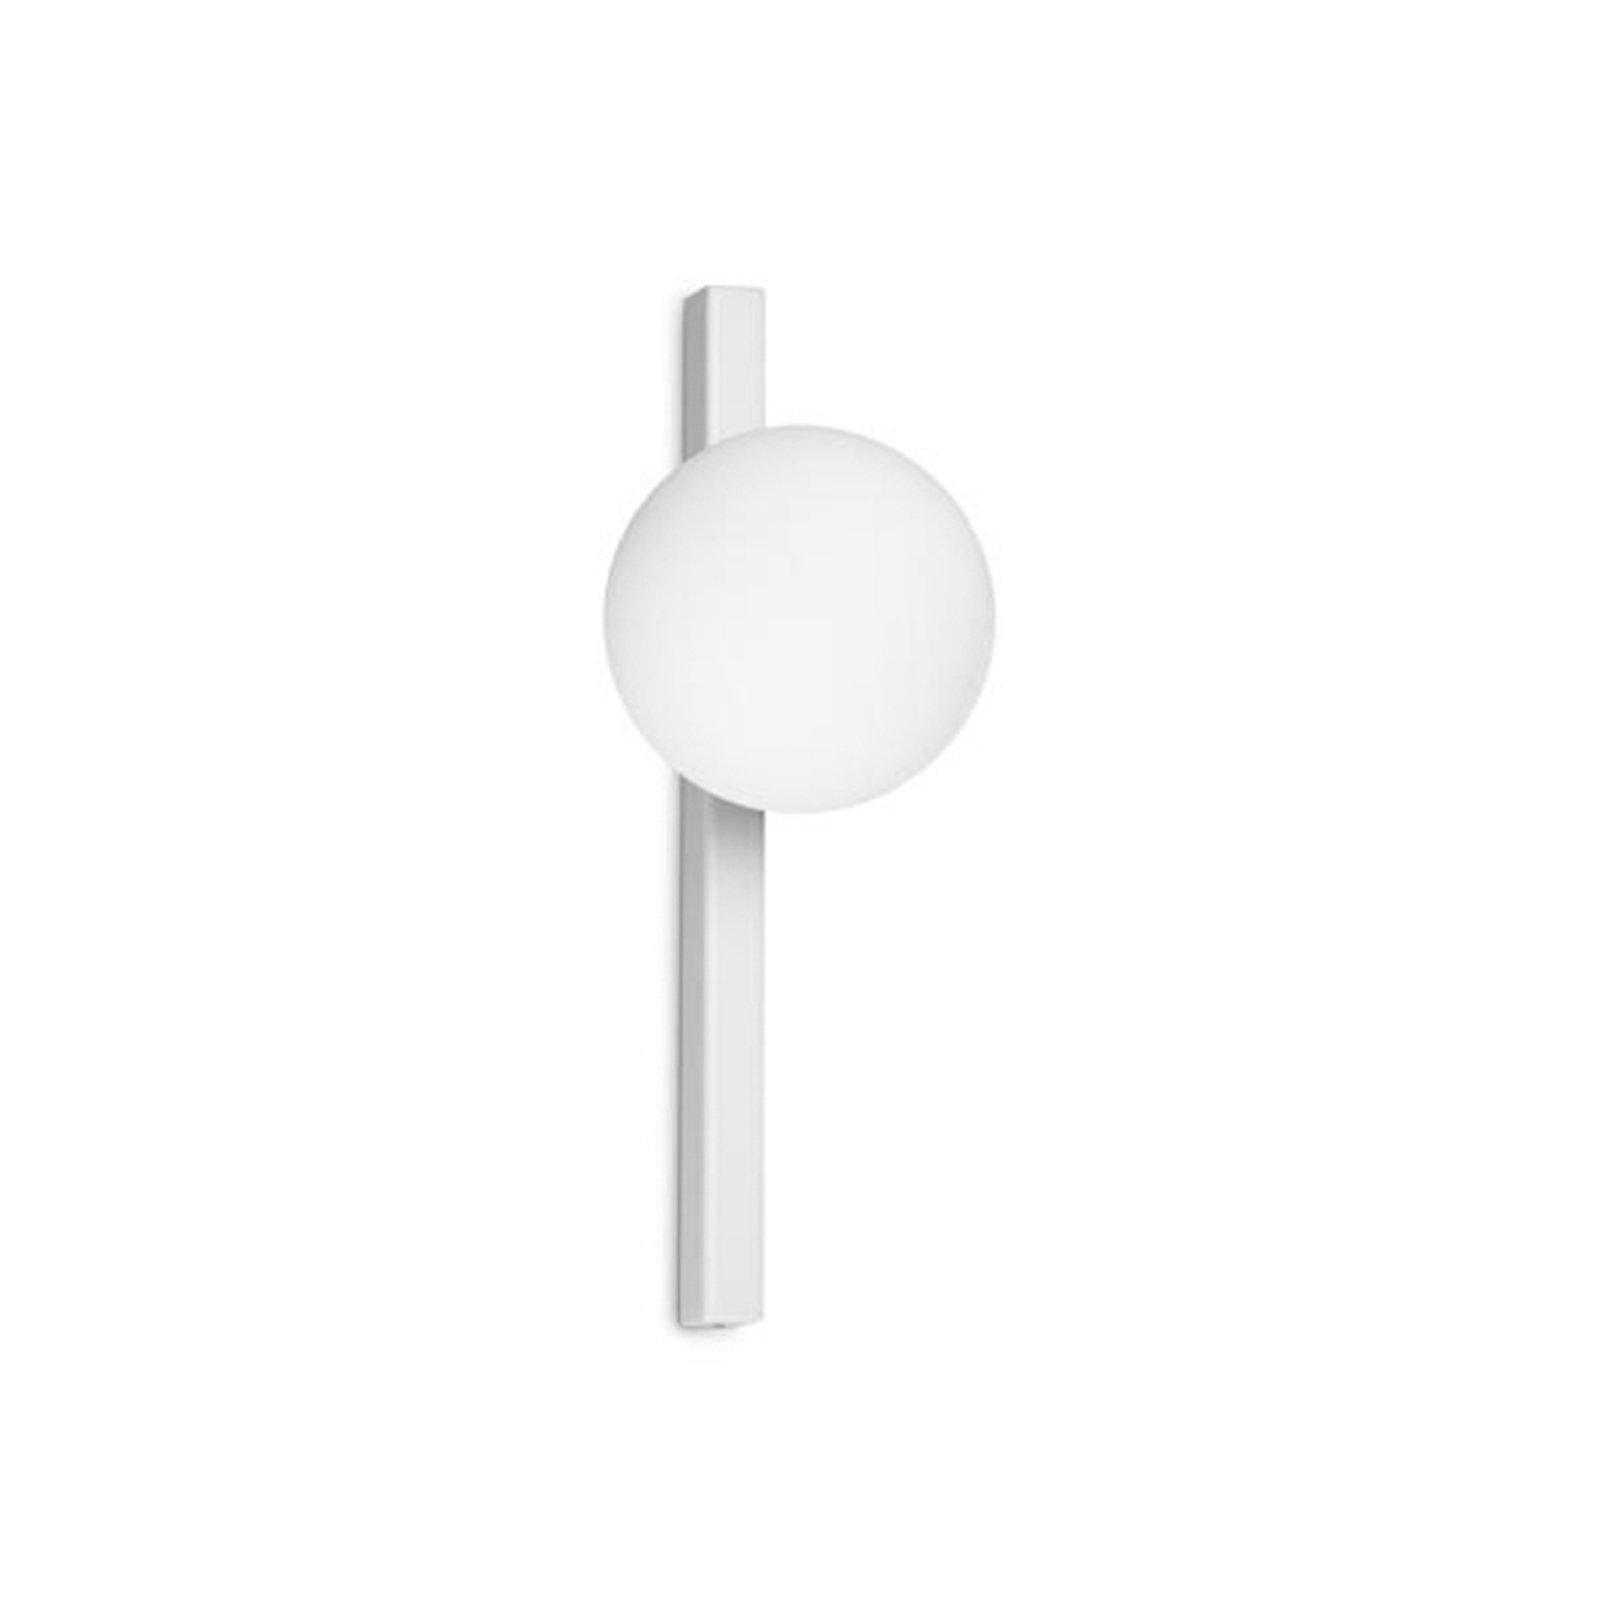 Ideal Lux applique Binomio, bianco, a 1 luce, metallo, vetro